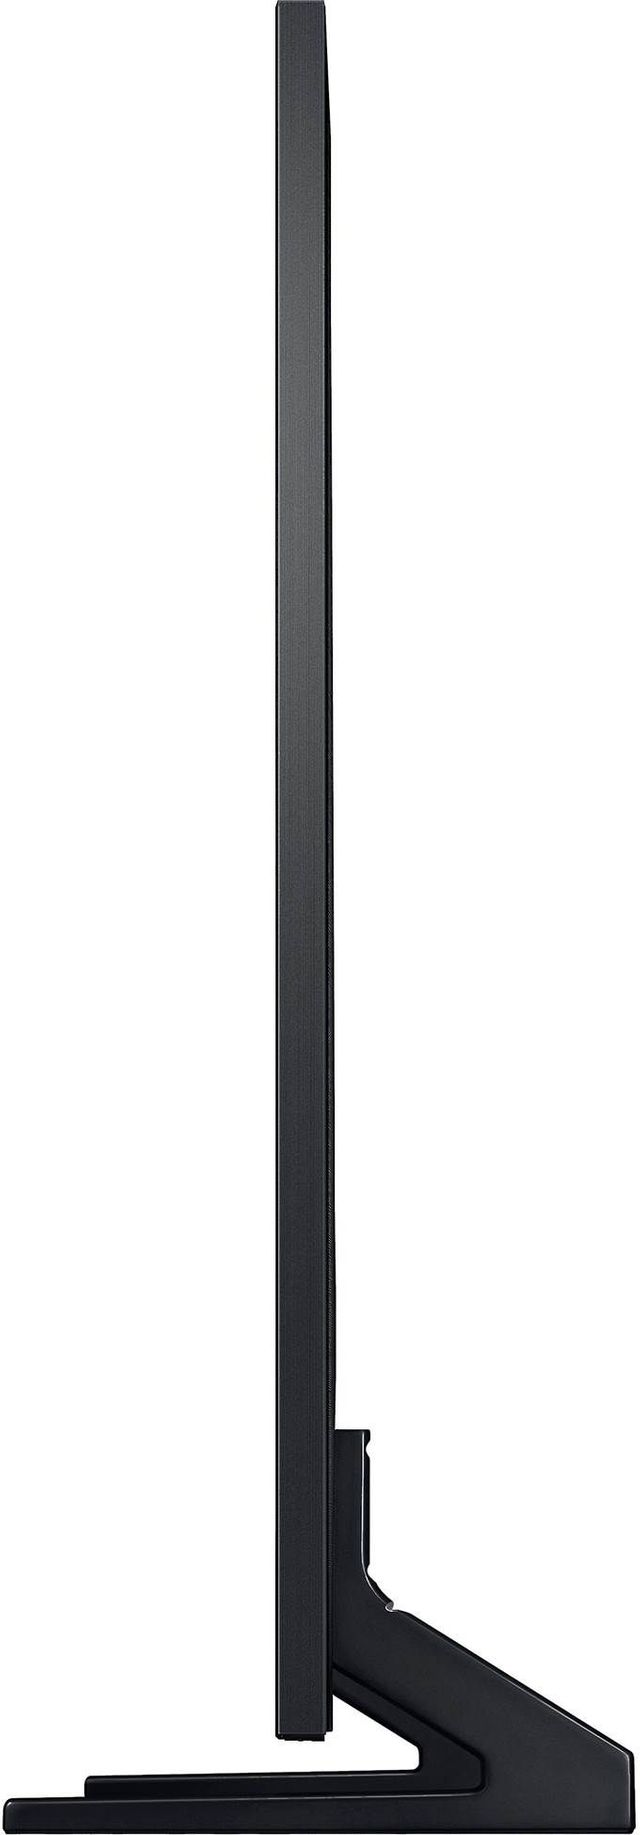 Samsung QLED Q900 Series 85" QLED 8K UHD Smart TV with HDR 4